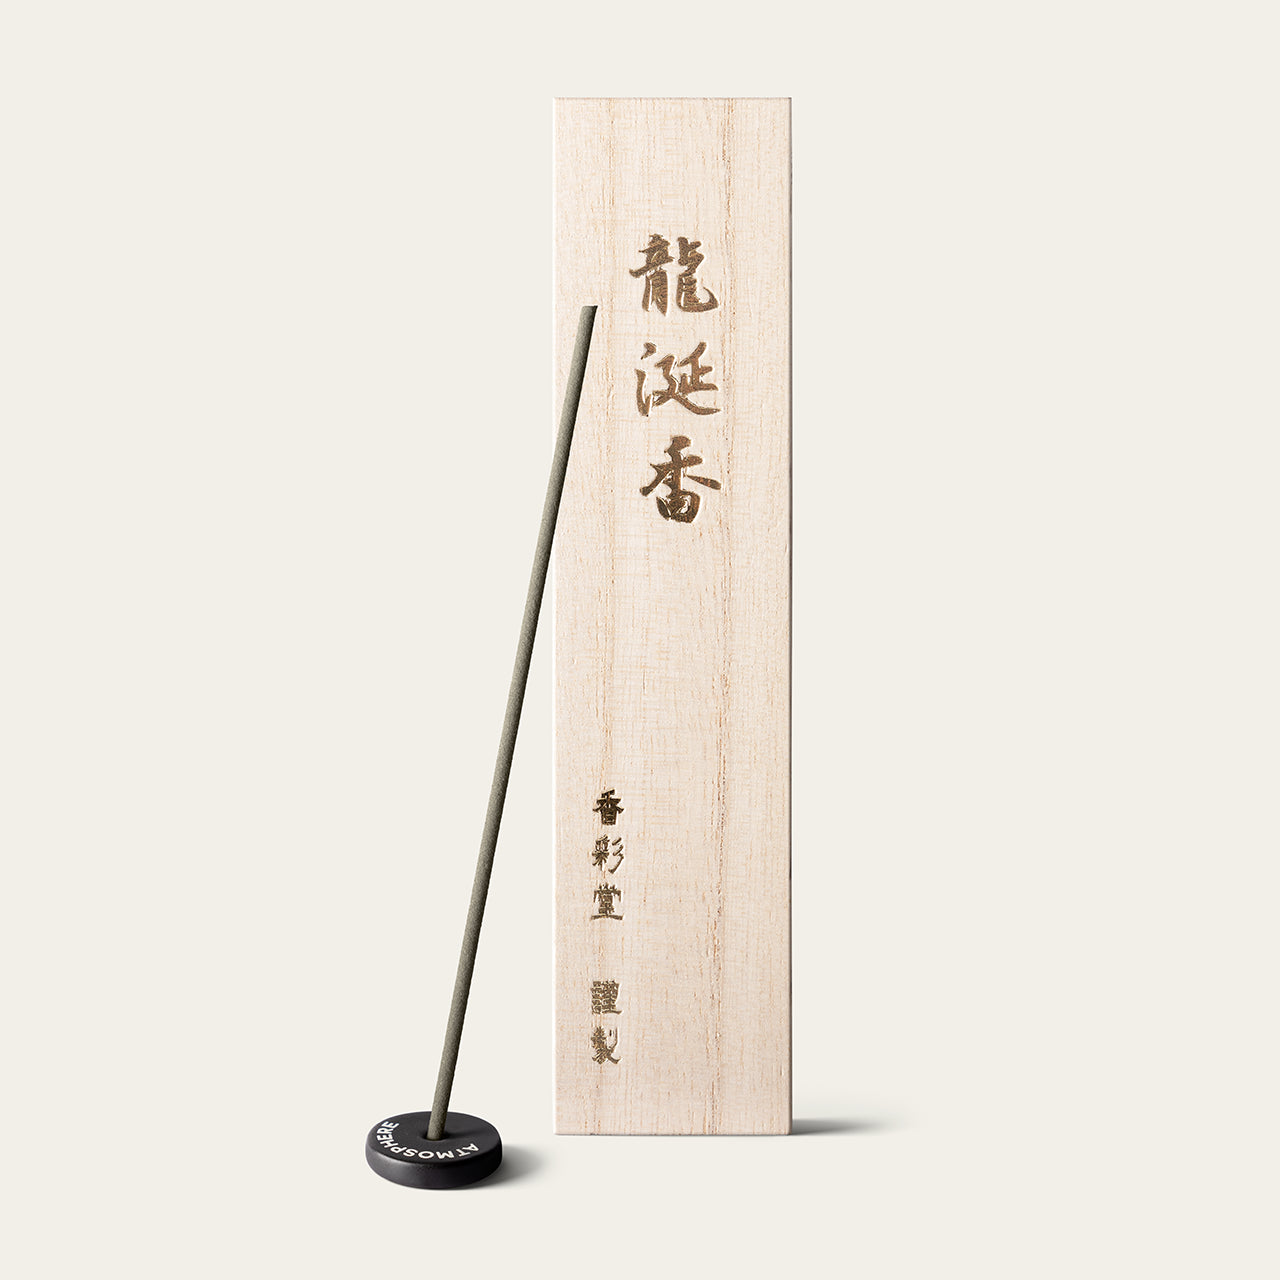 Kousaido Premium Ambergris Japanese incense sticks (55 sticks) with Atmosphere ceramic incense holder